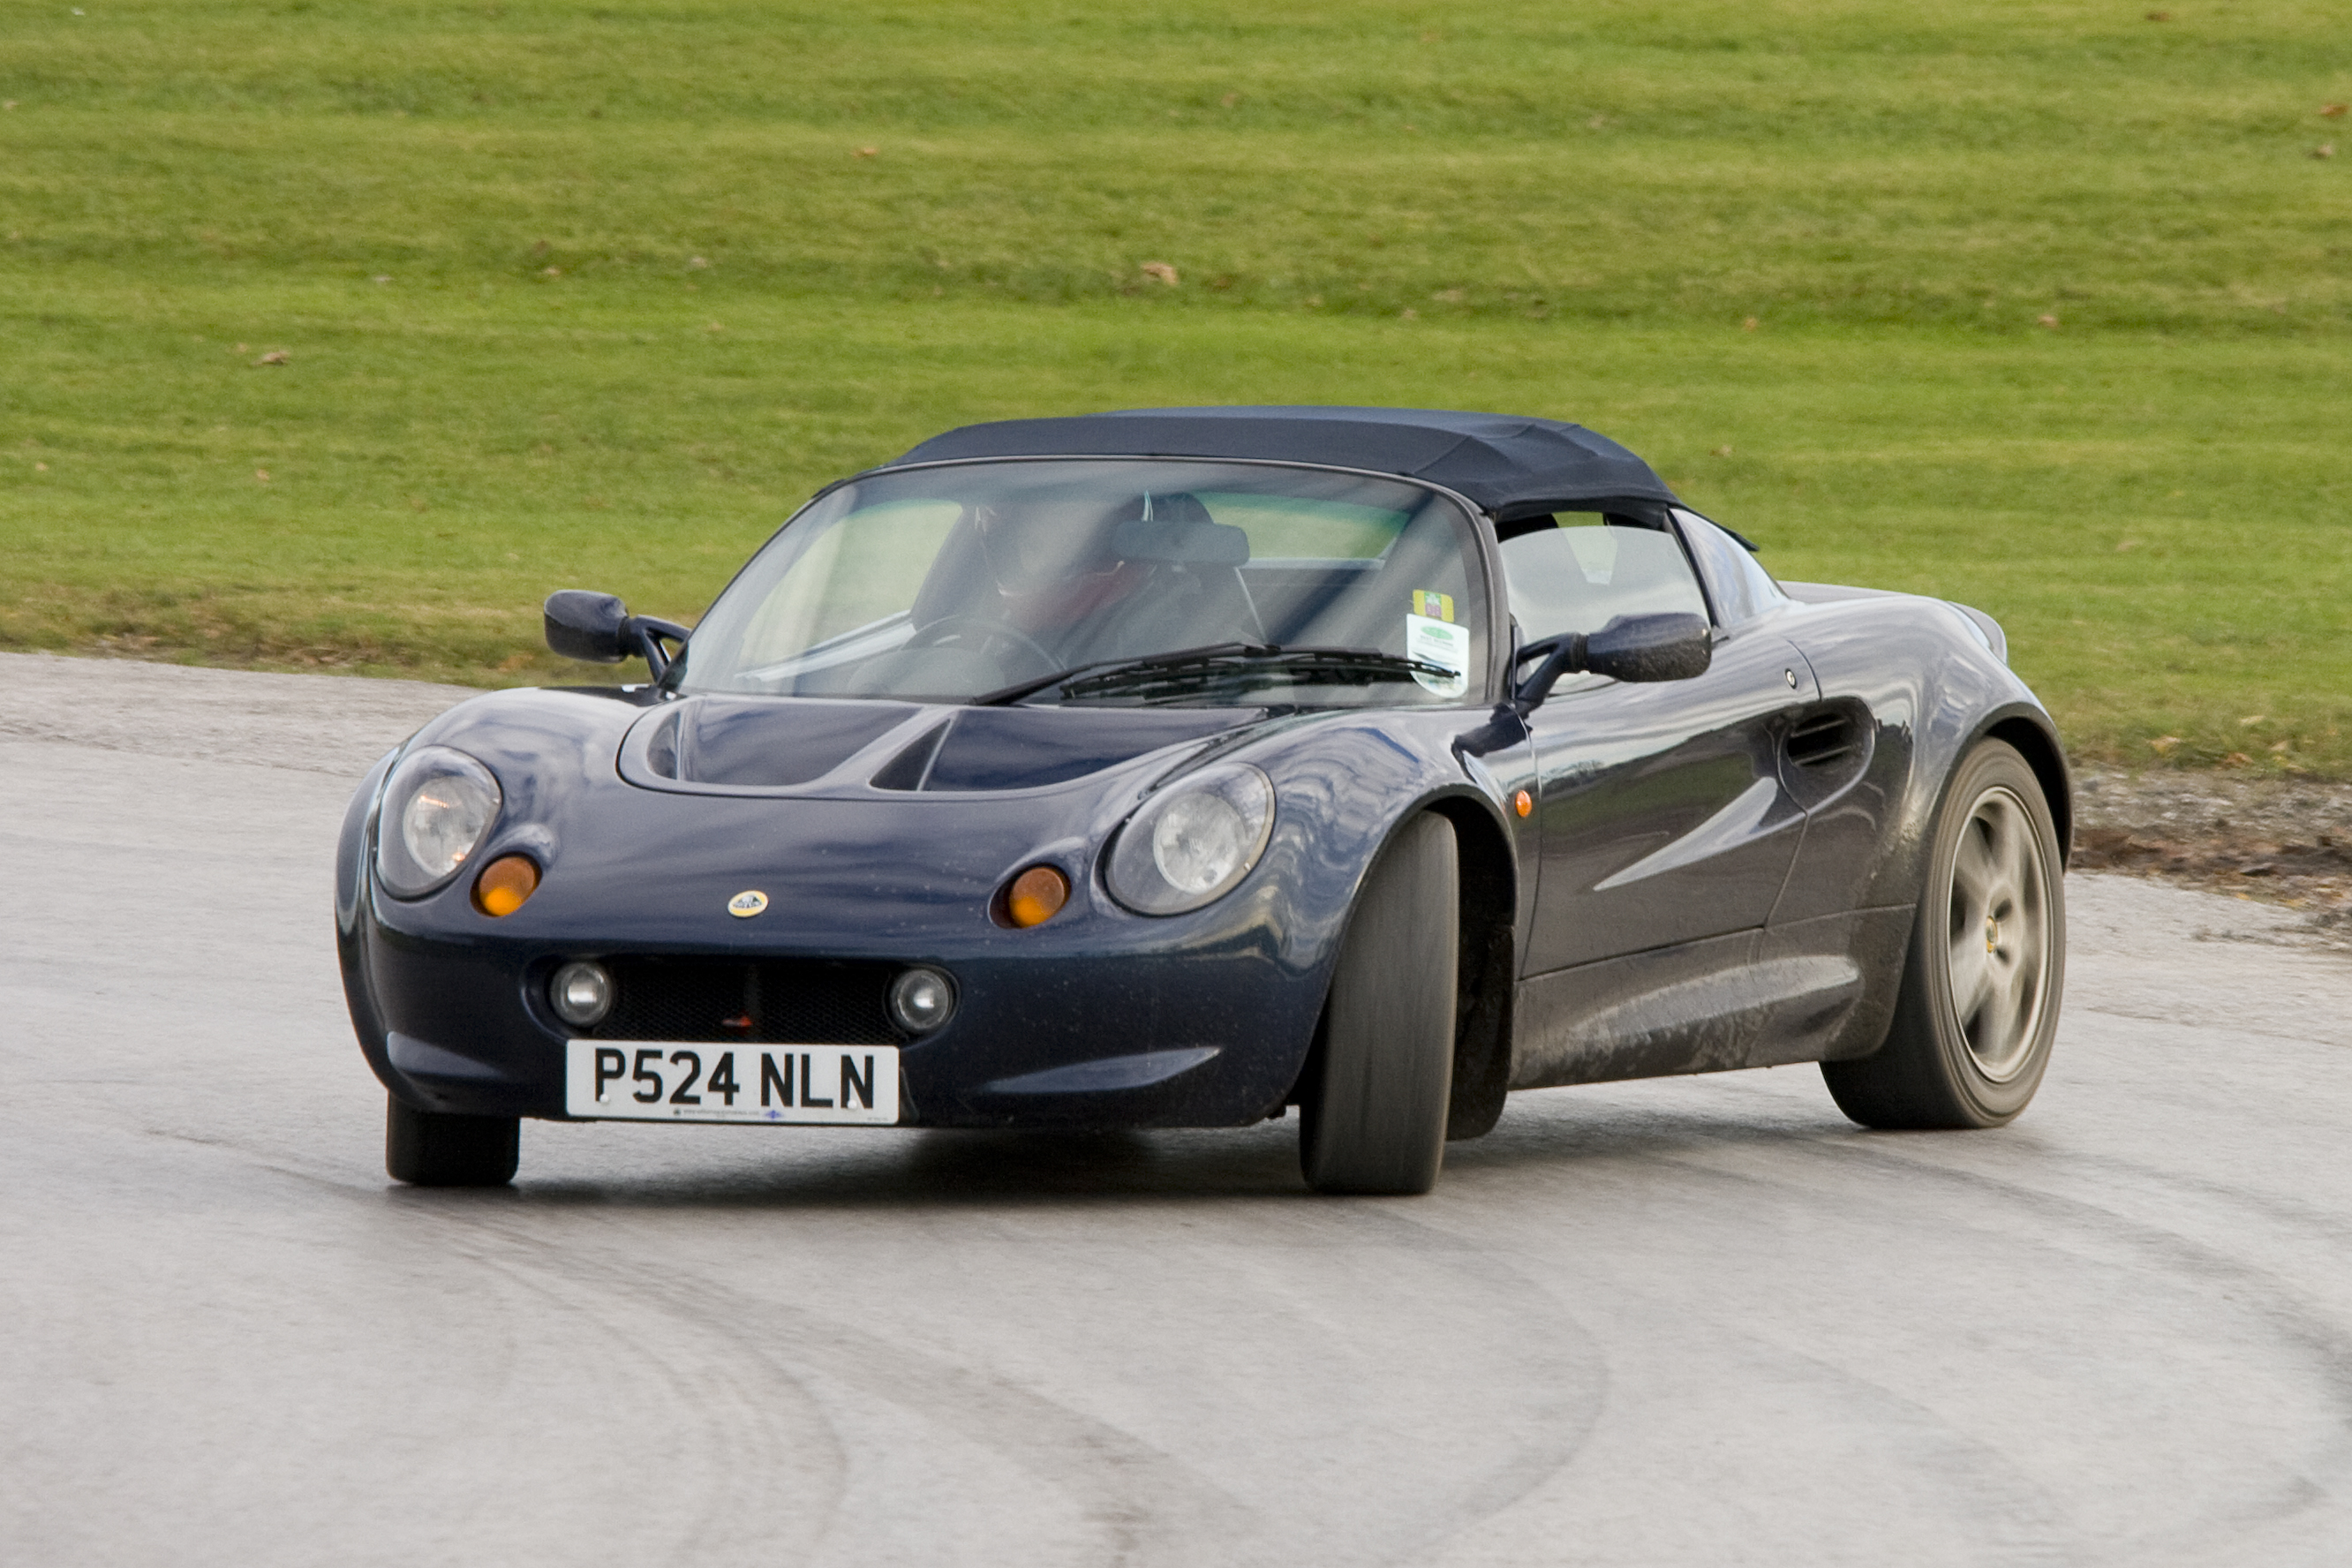 Lotus Elise - Drifting, Oulton Park | Flickr - Photo Sharing!